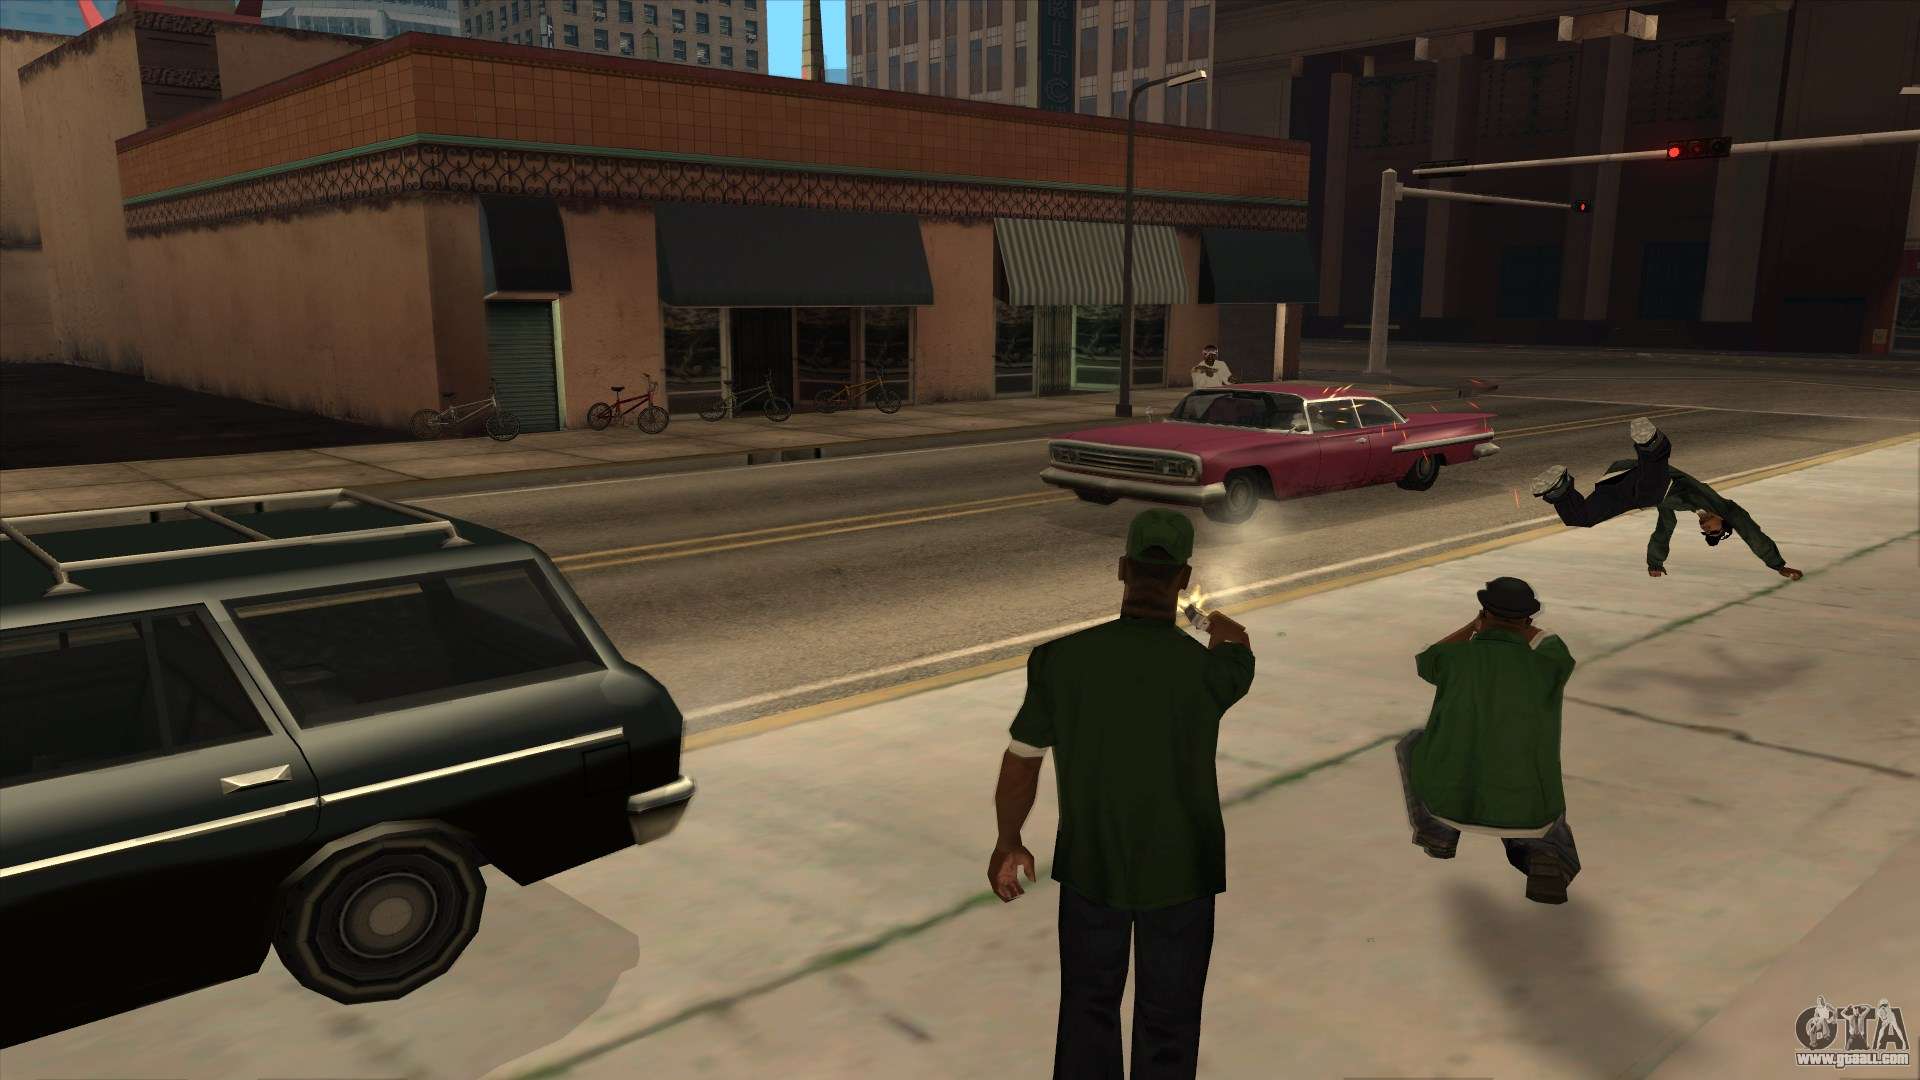 GTA: San Andreas just got a brand-new mission